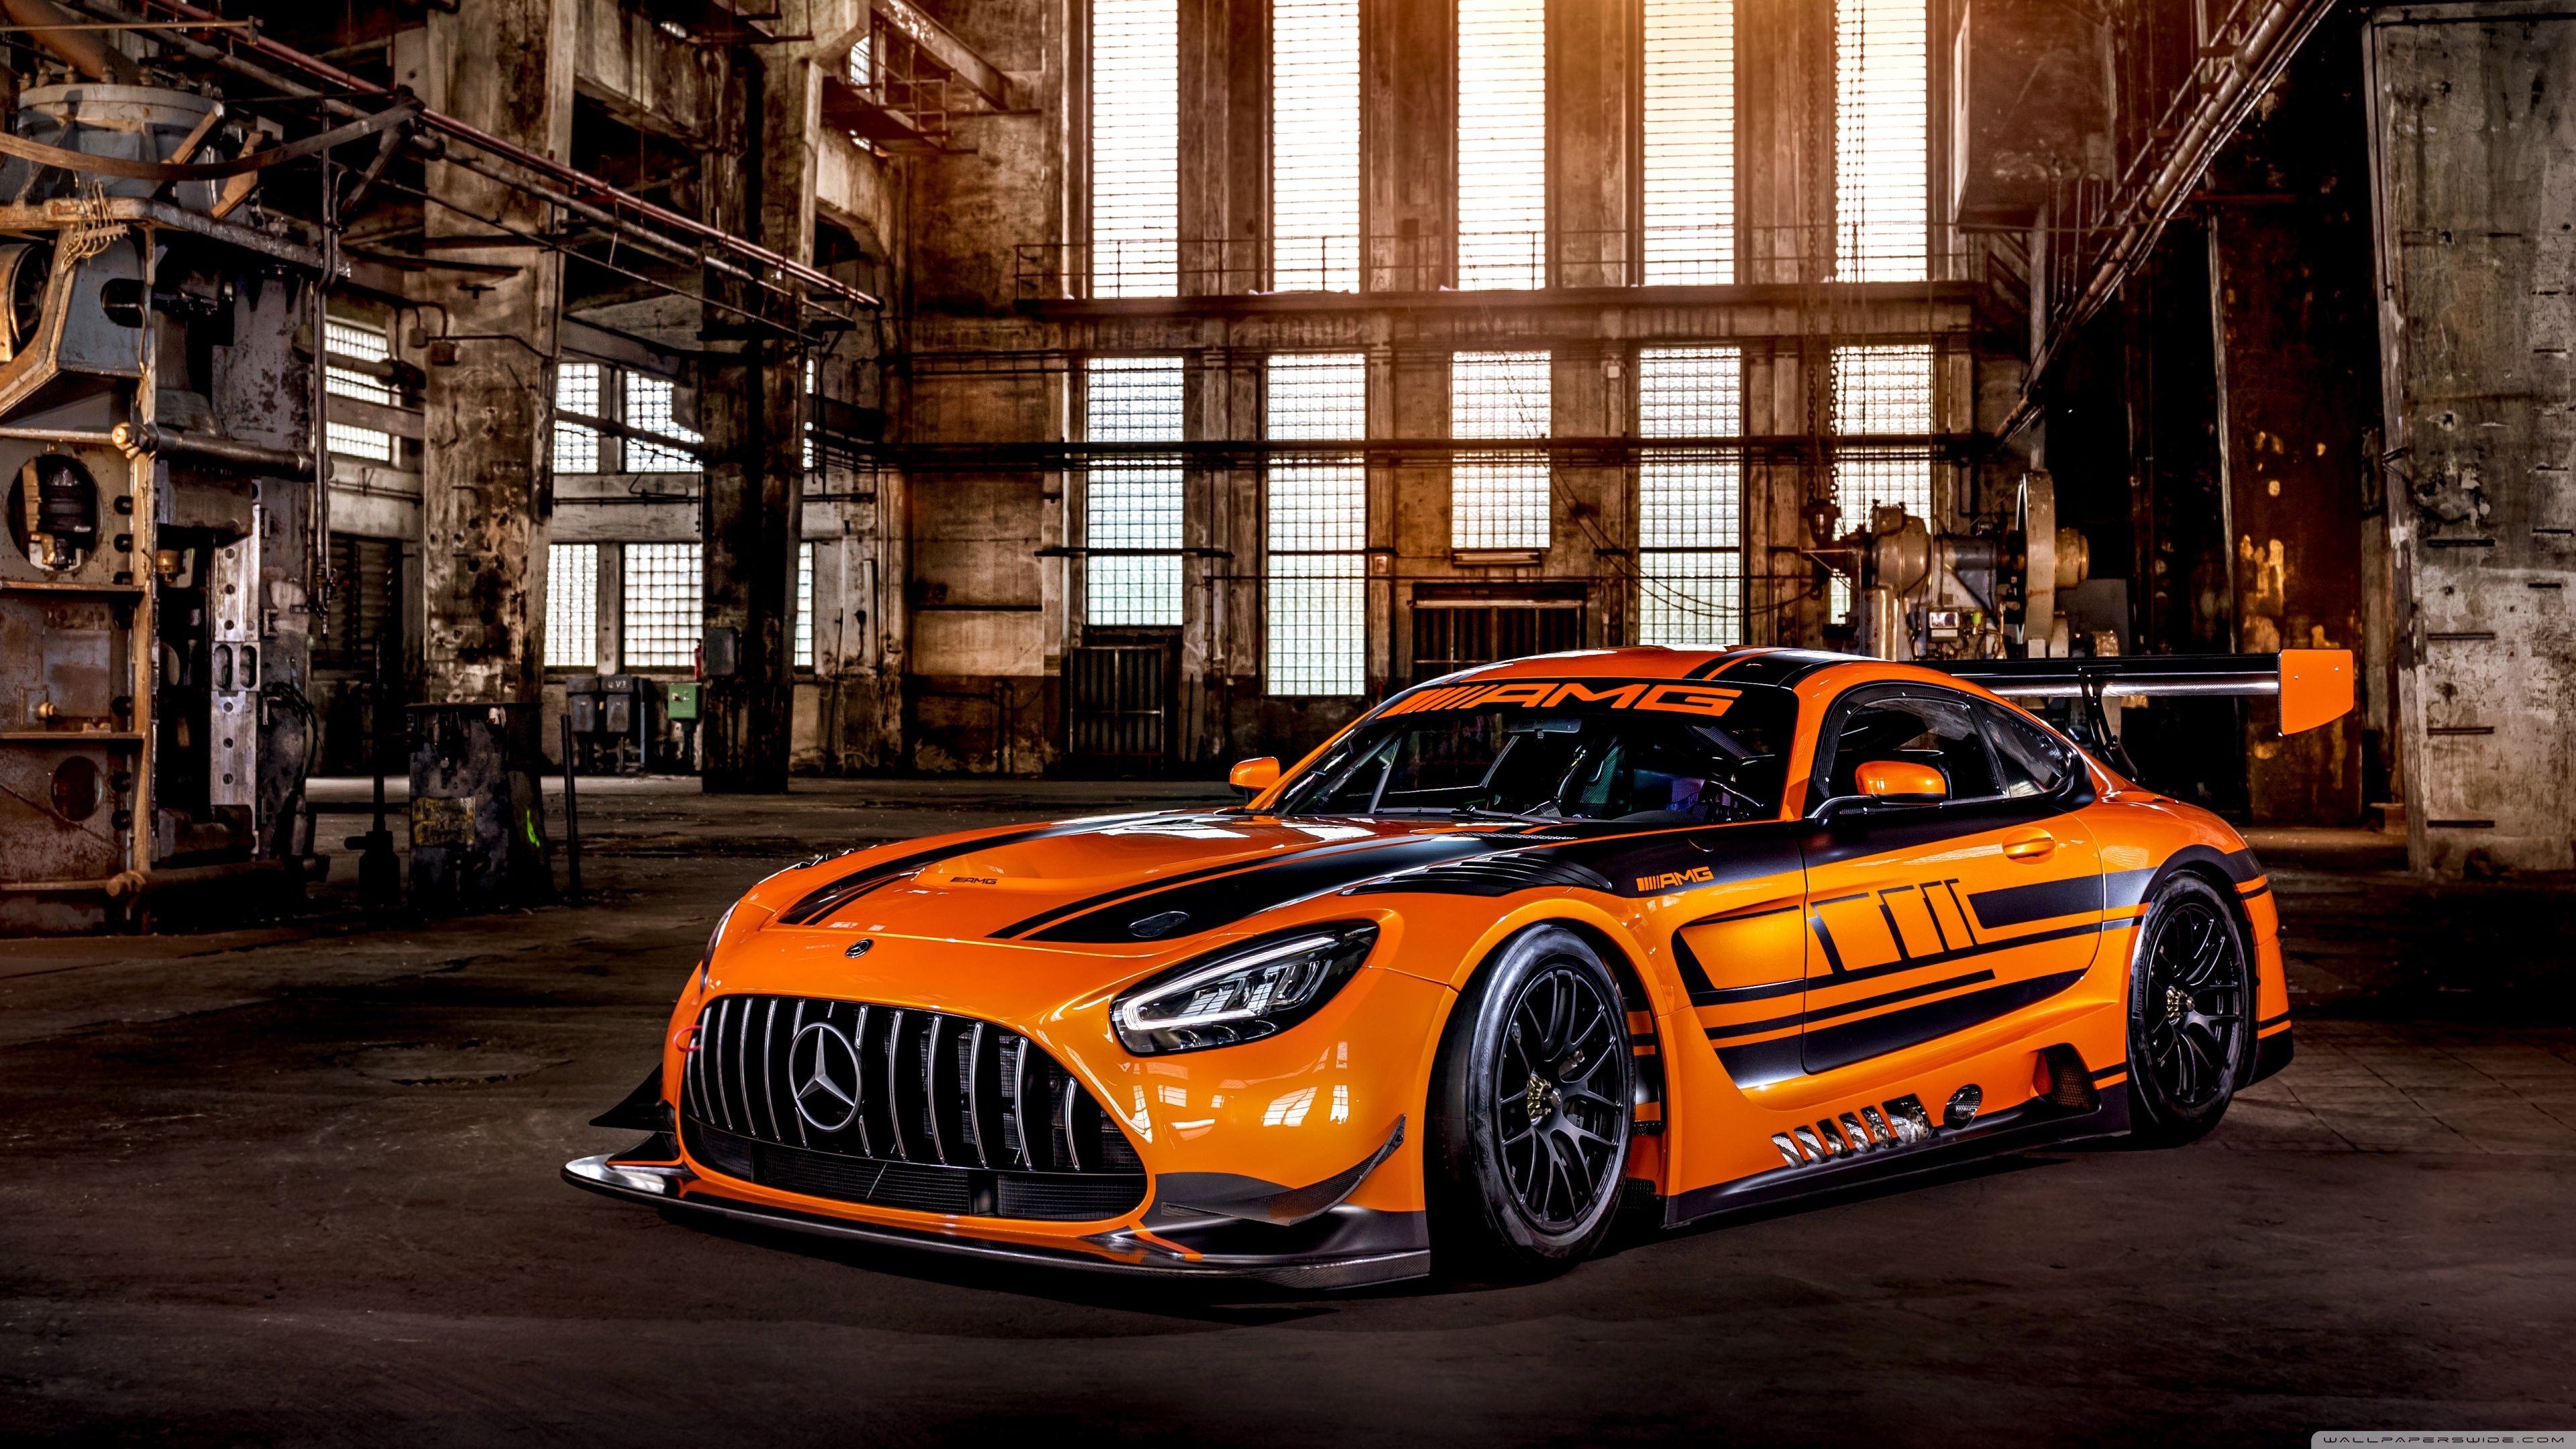 Orange Mercedes AMG GT3 Race Car 2019 Ultra HD Desktop Background Wallpaper for: Widescreen & UltraWide Desktop & Laptop, Multi Display, Dual & Triple Monitor, Tablet